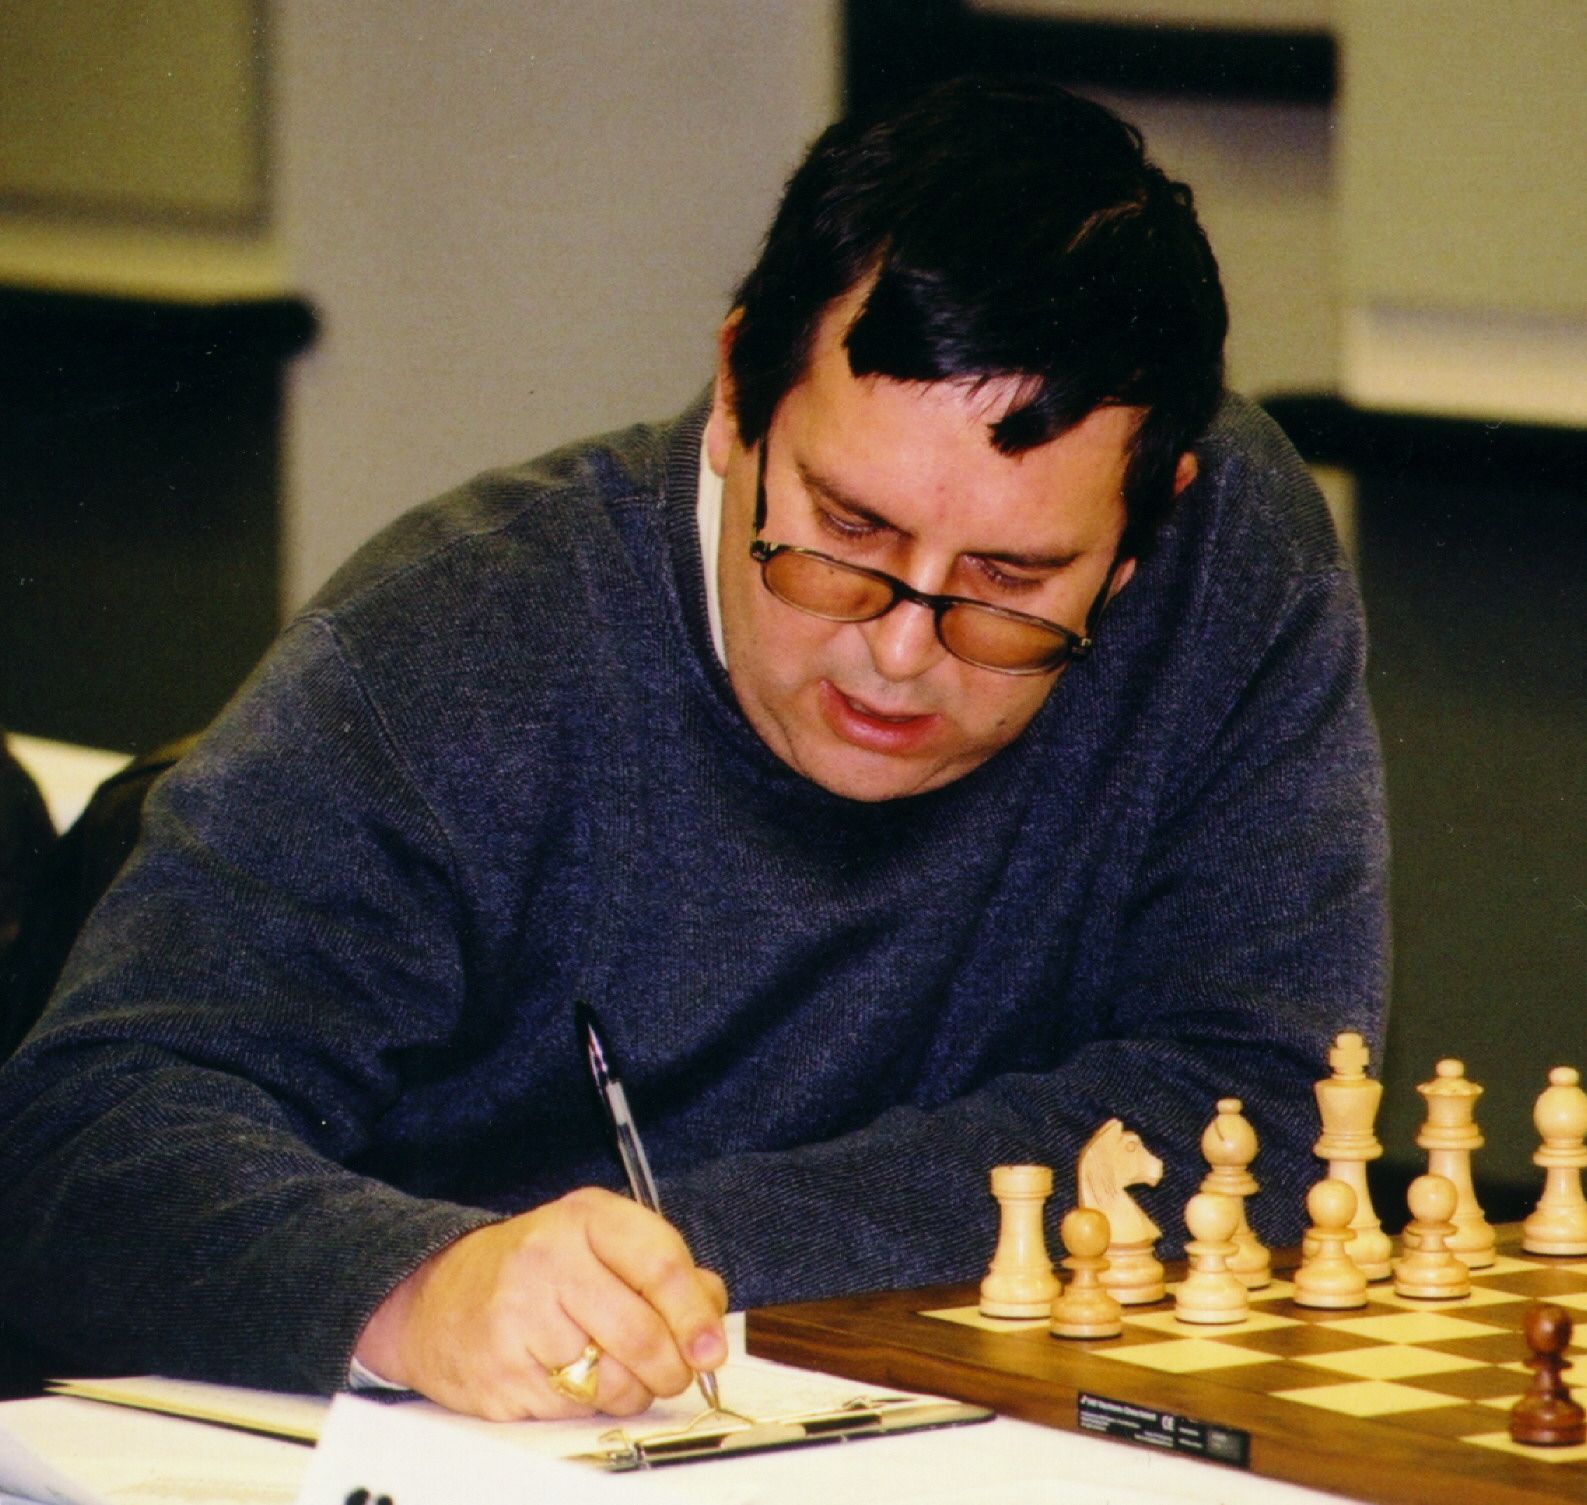 Emory Tate  Chess Musings